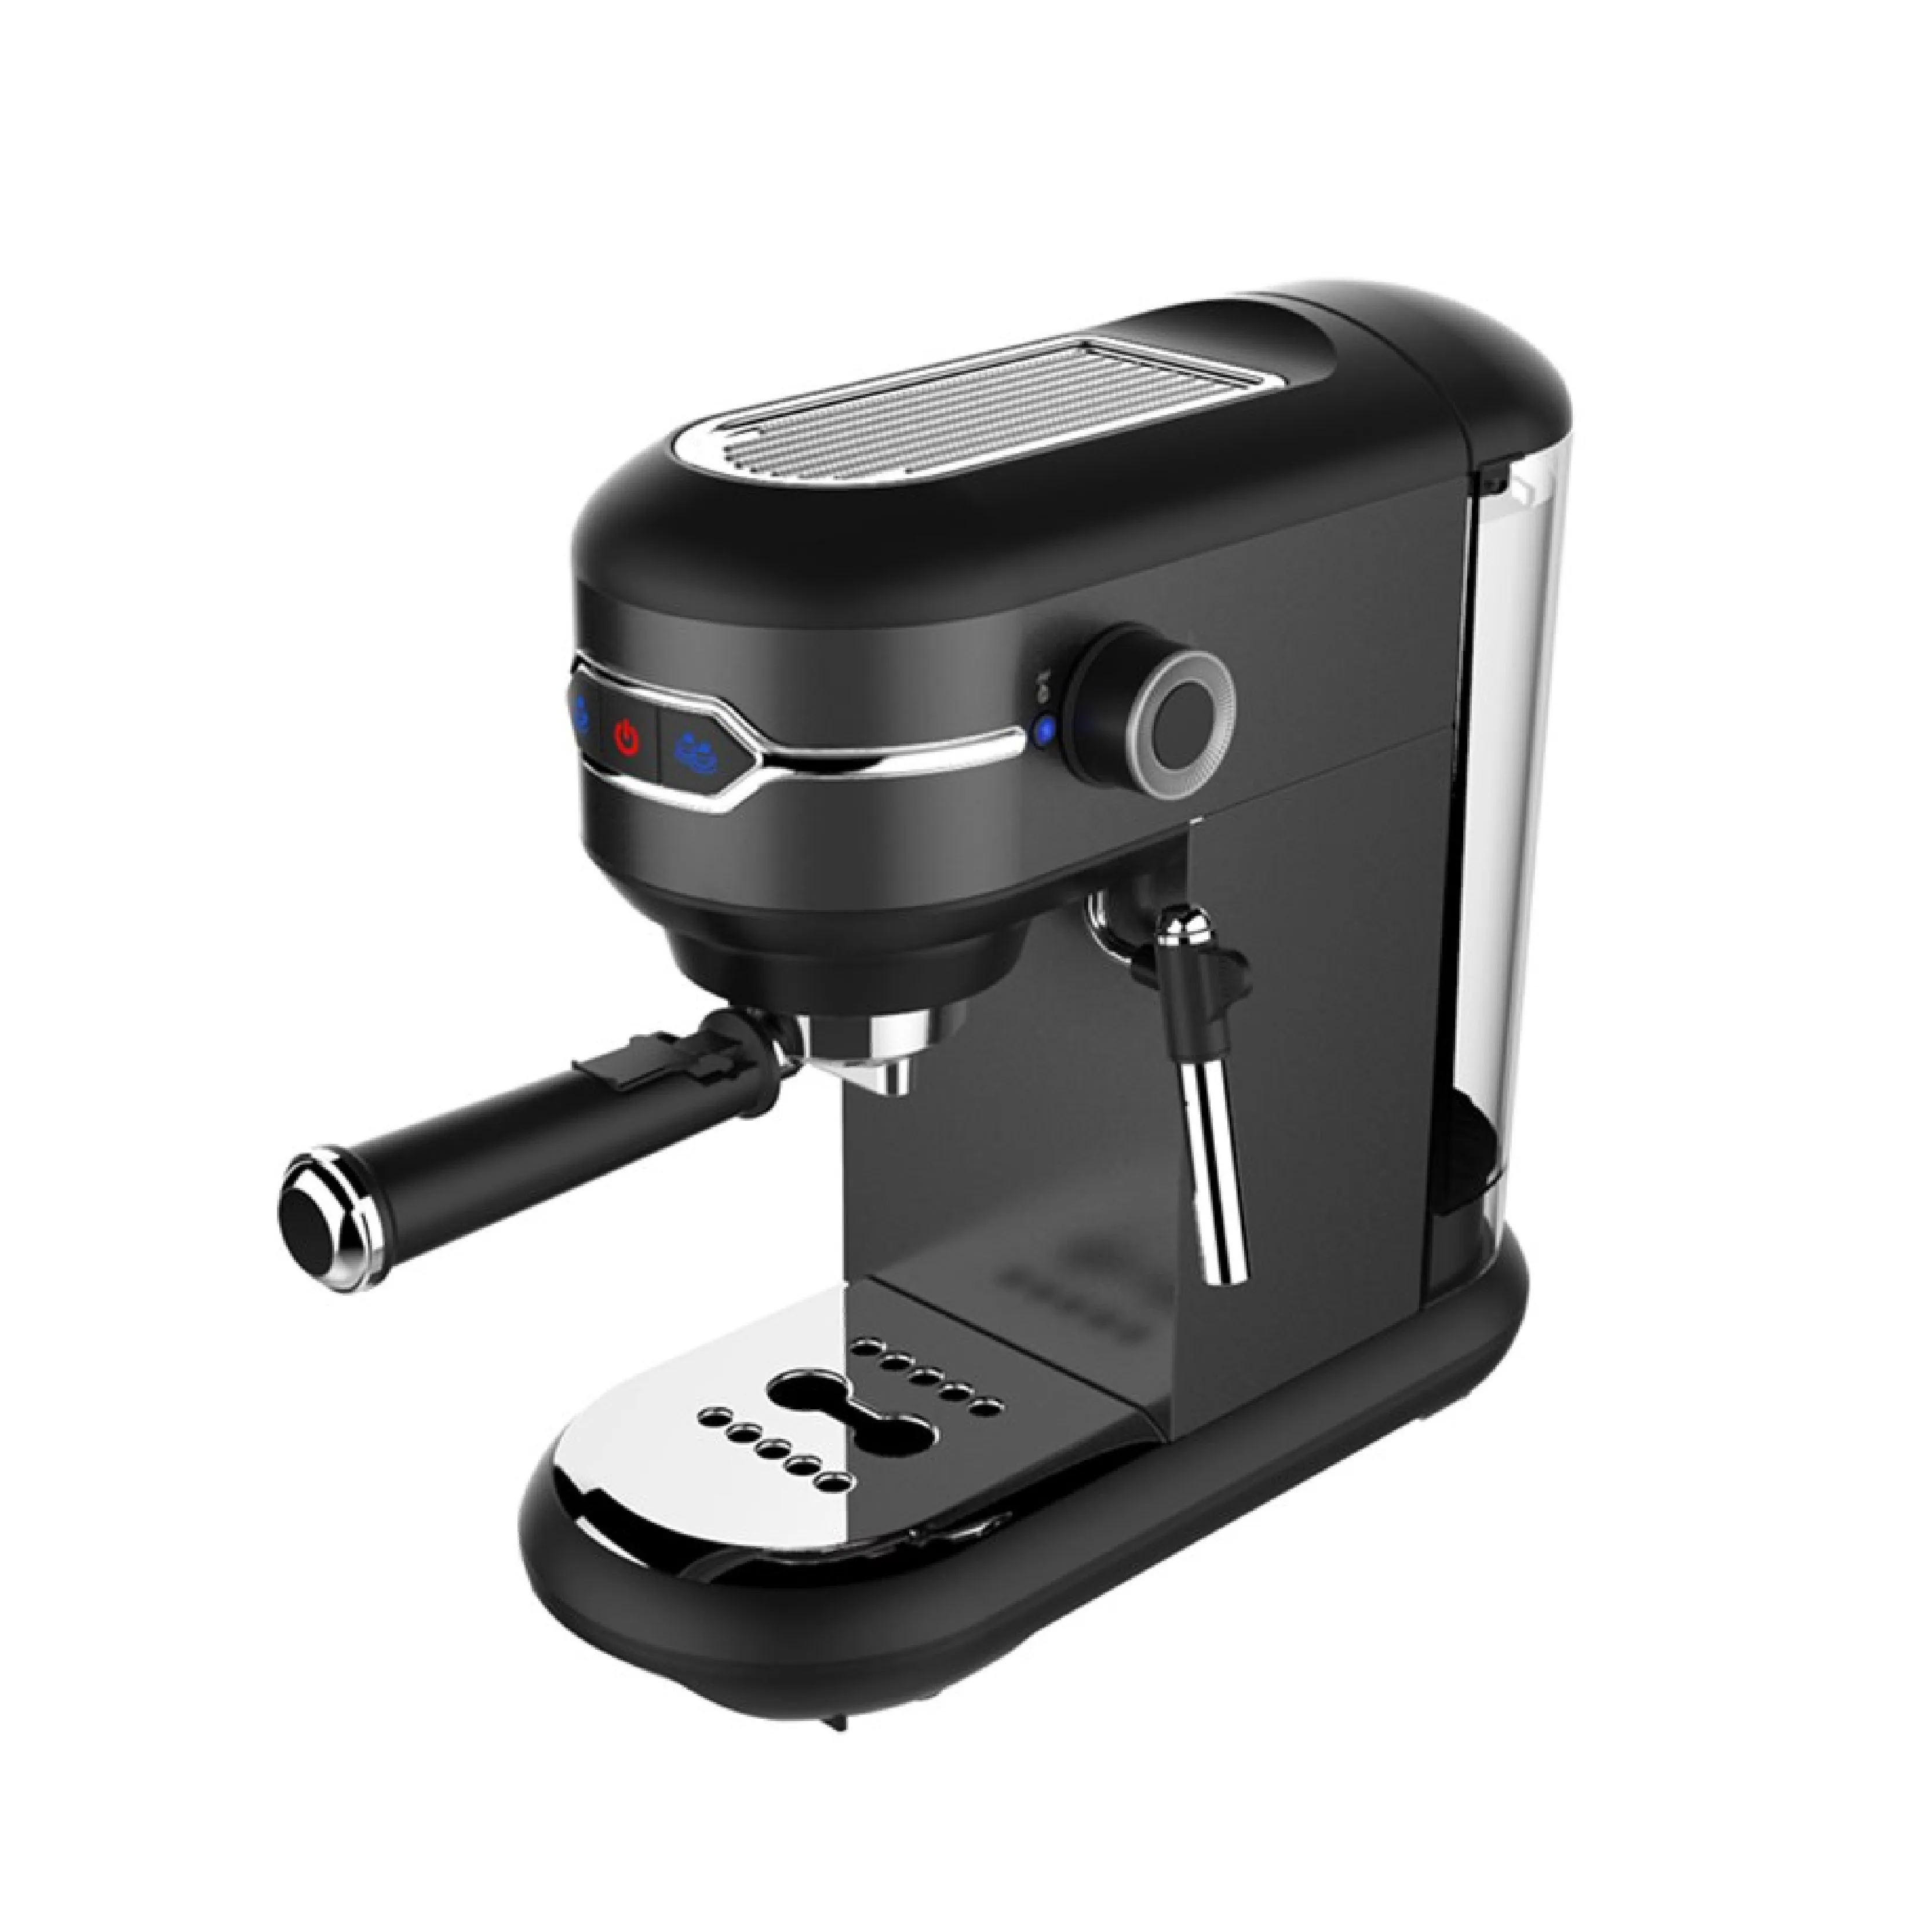 Our Generation Accessories - Espresso machine » Cheap Delivery